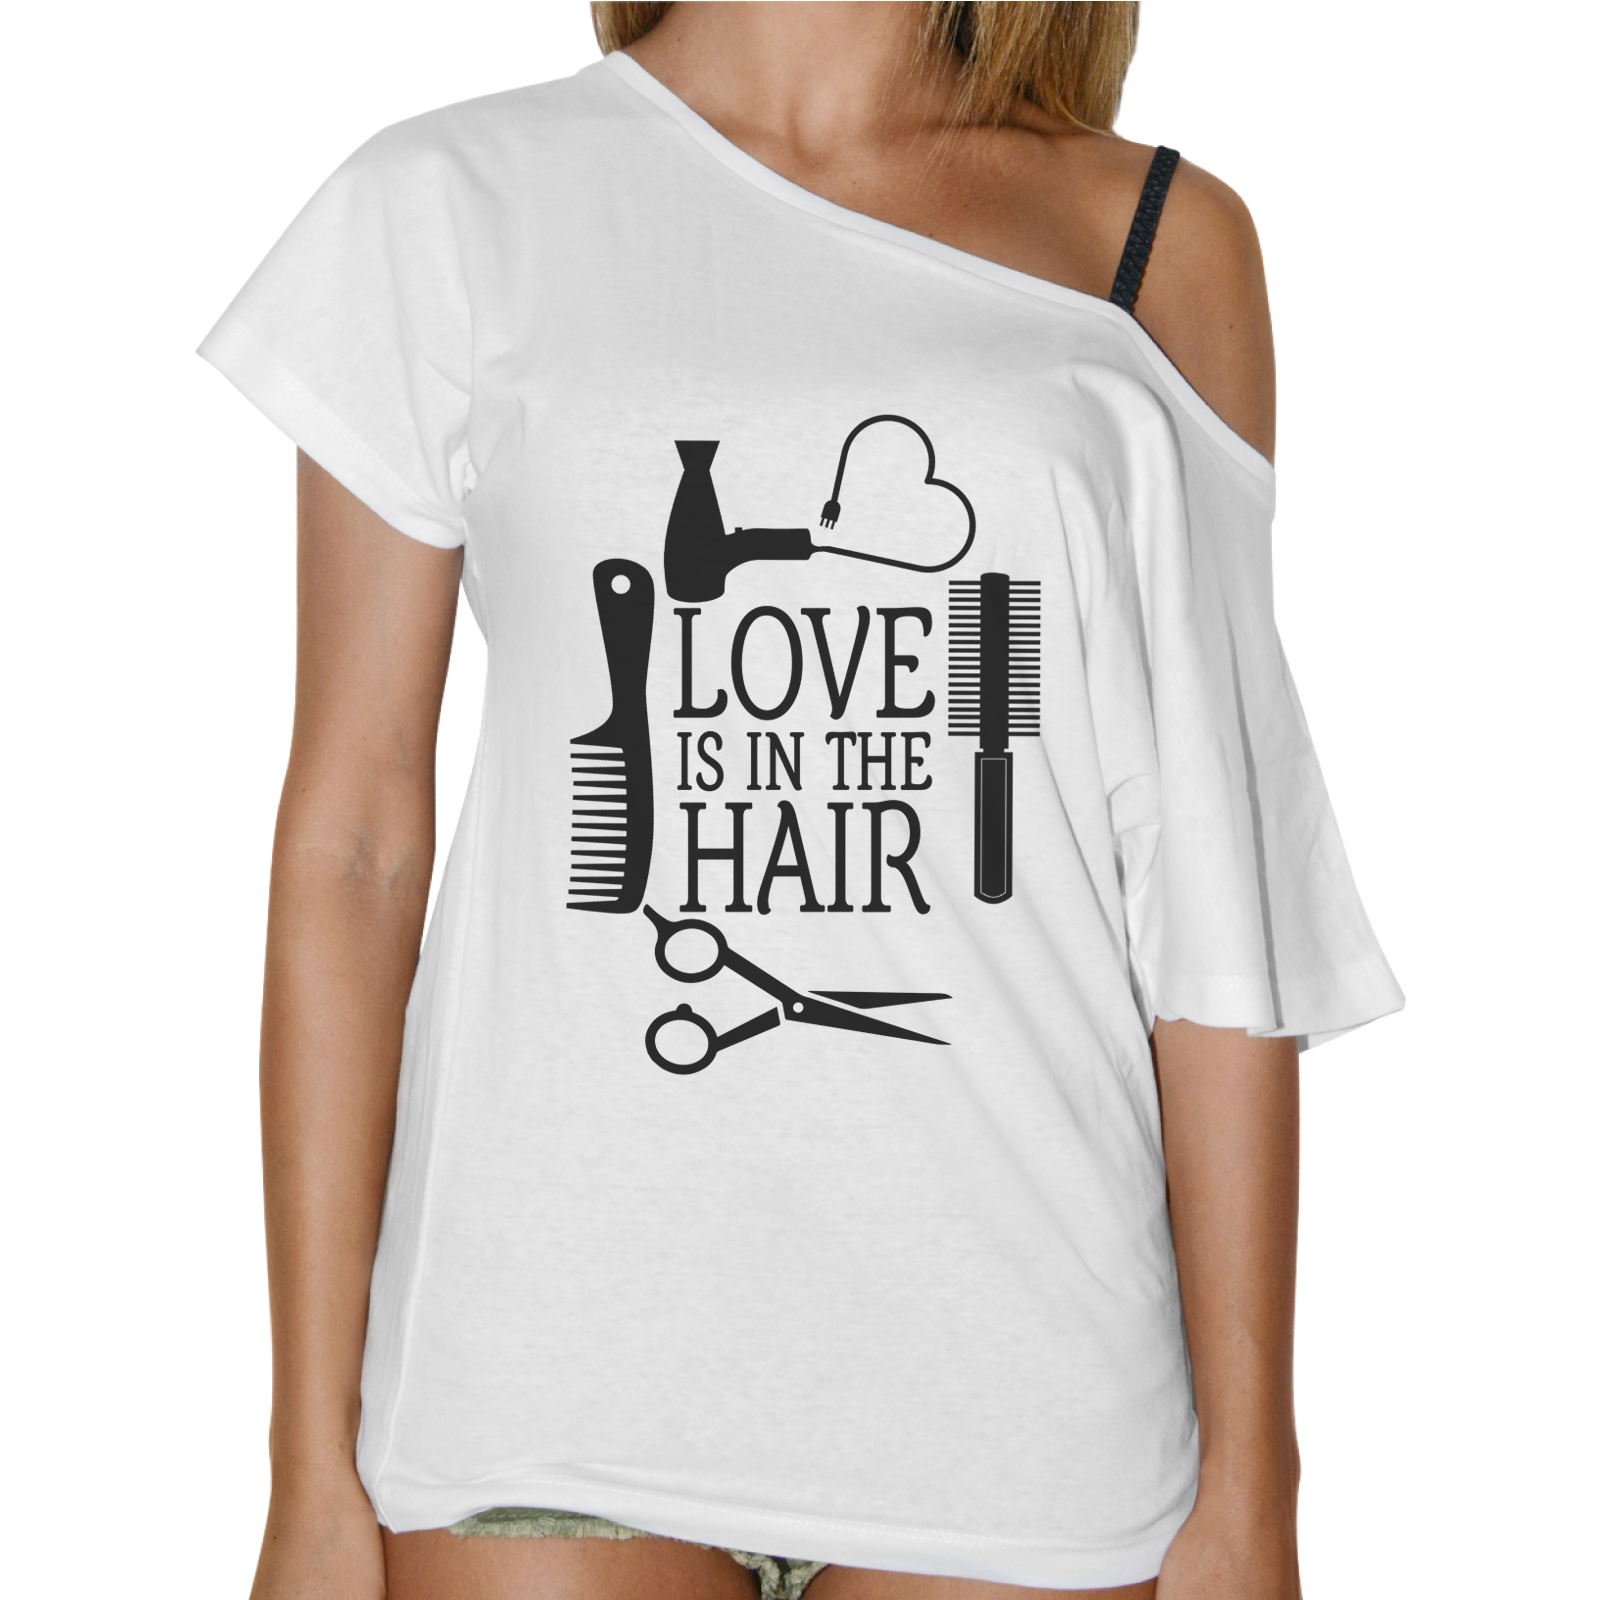 T-Shirt Donna Collo Barca LOVE IN THE HAIR